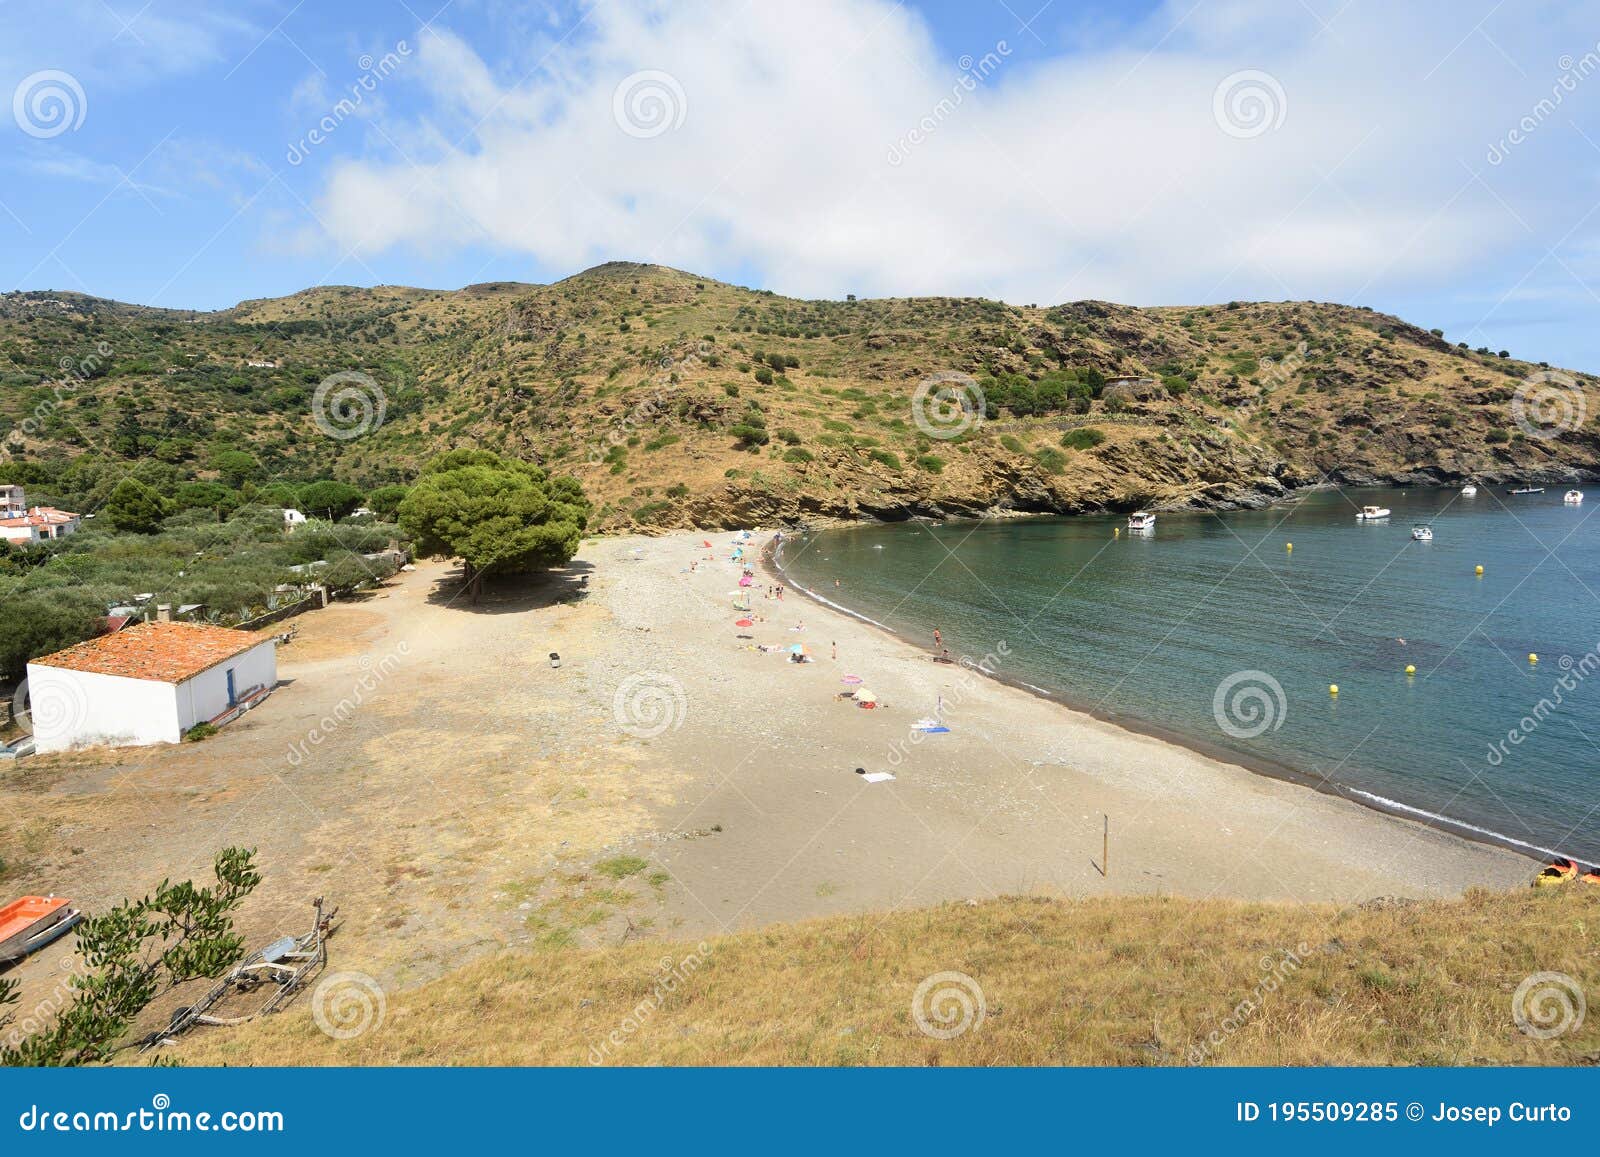 view of joncols beach in alt emporda, girona province, catalonia, spain